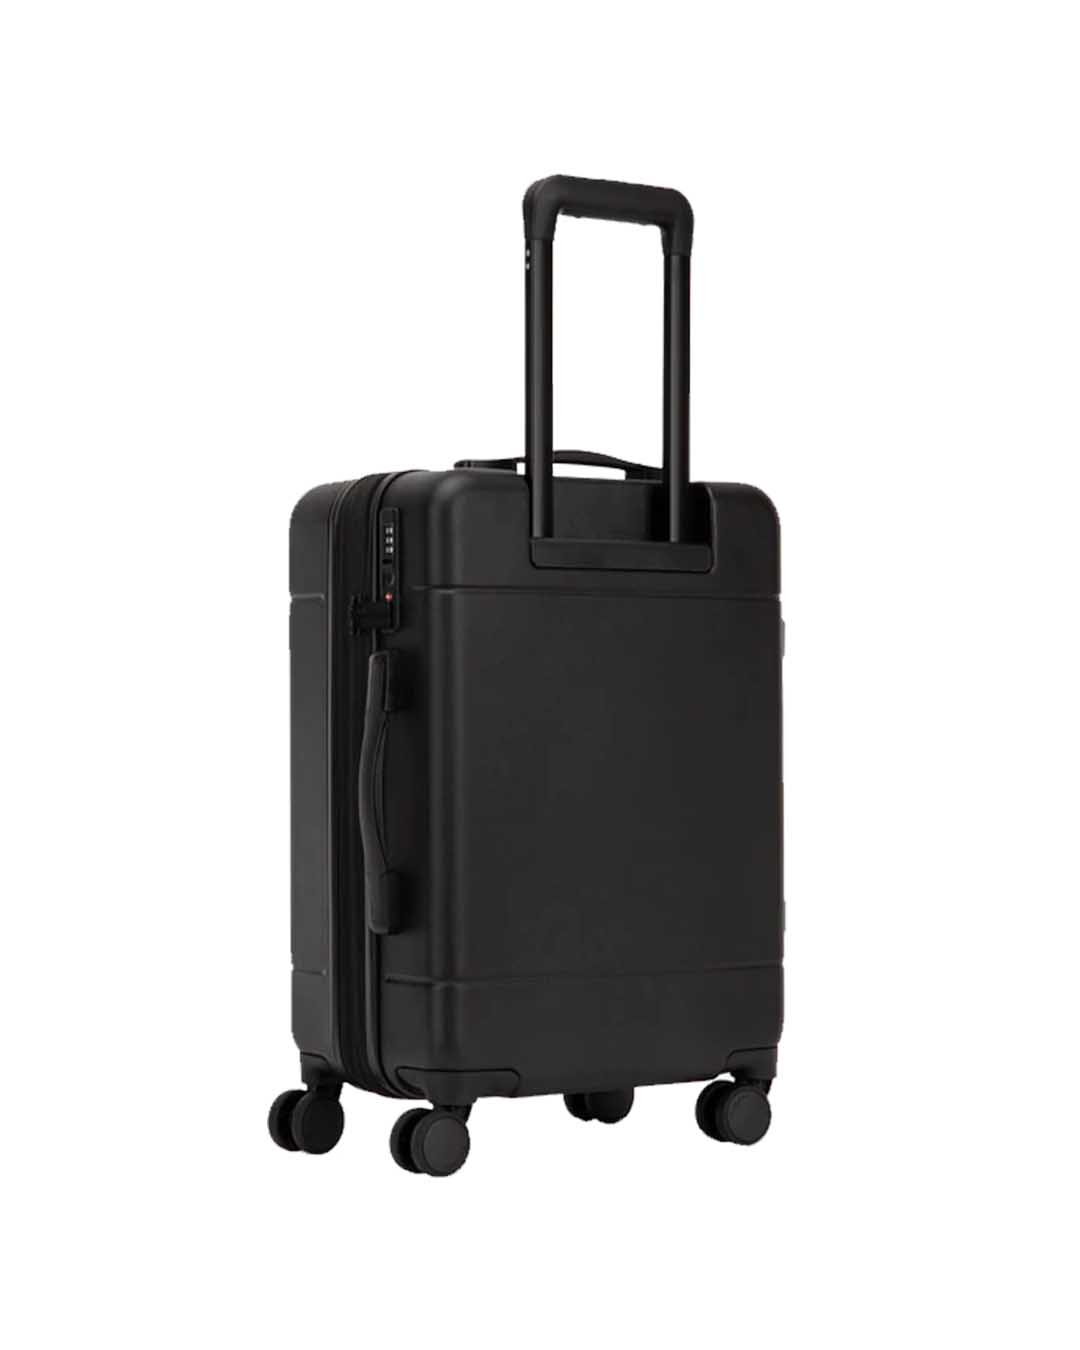 Calpak luggage review-02